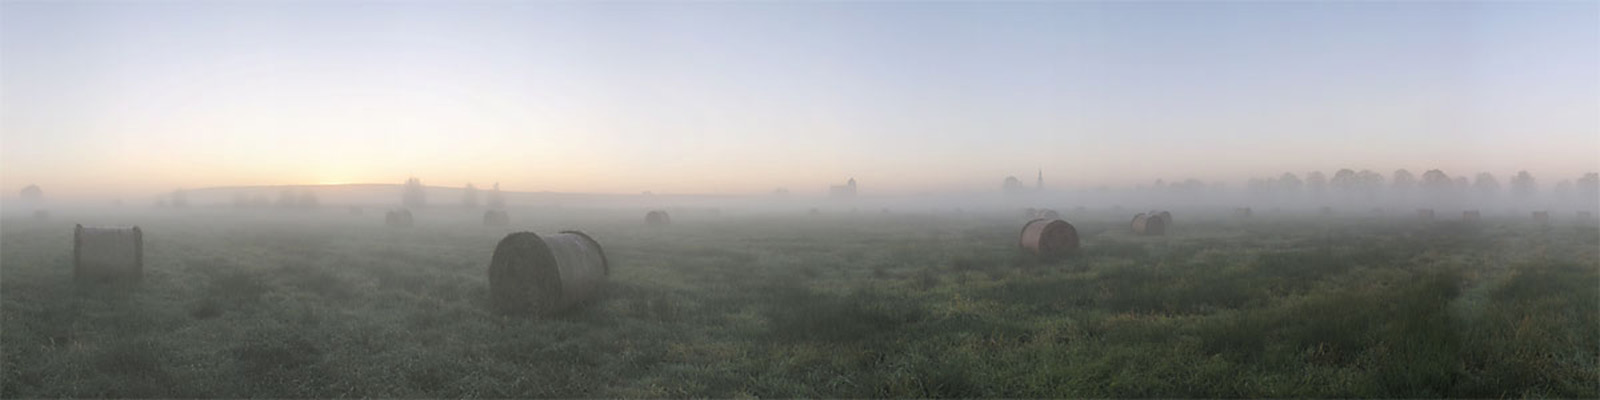 Panorama: Heuballen im Morgennebel - Motivnummer: hgw-cdf-07